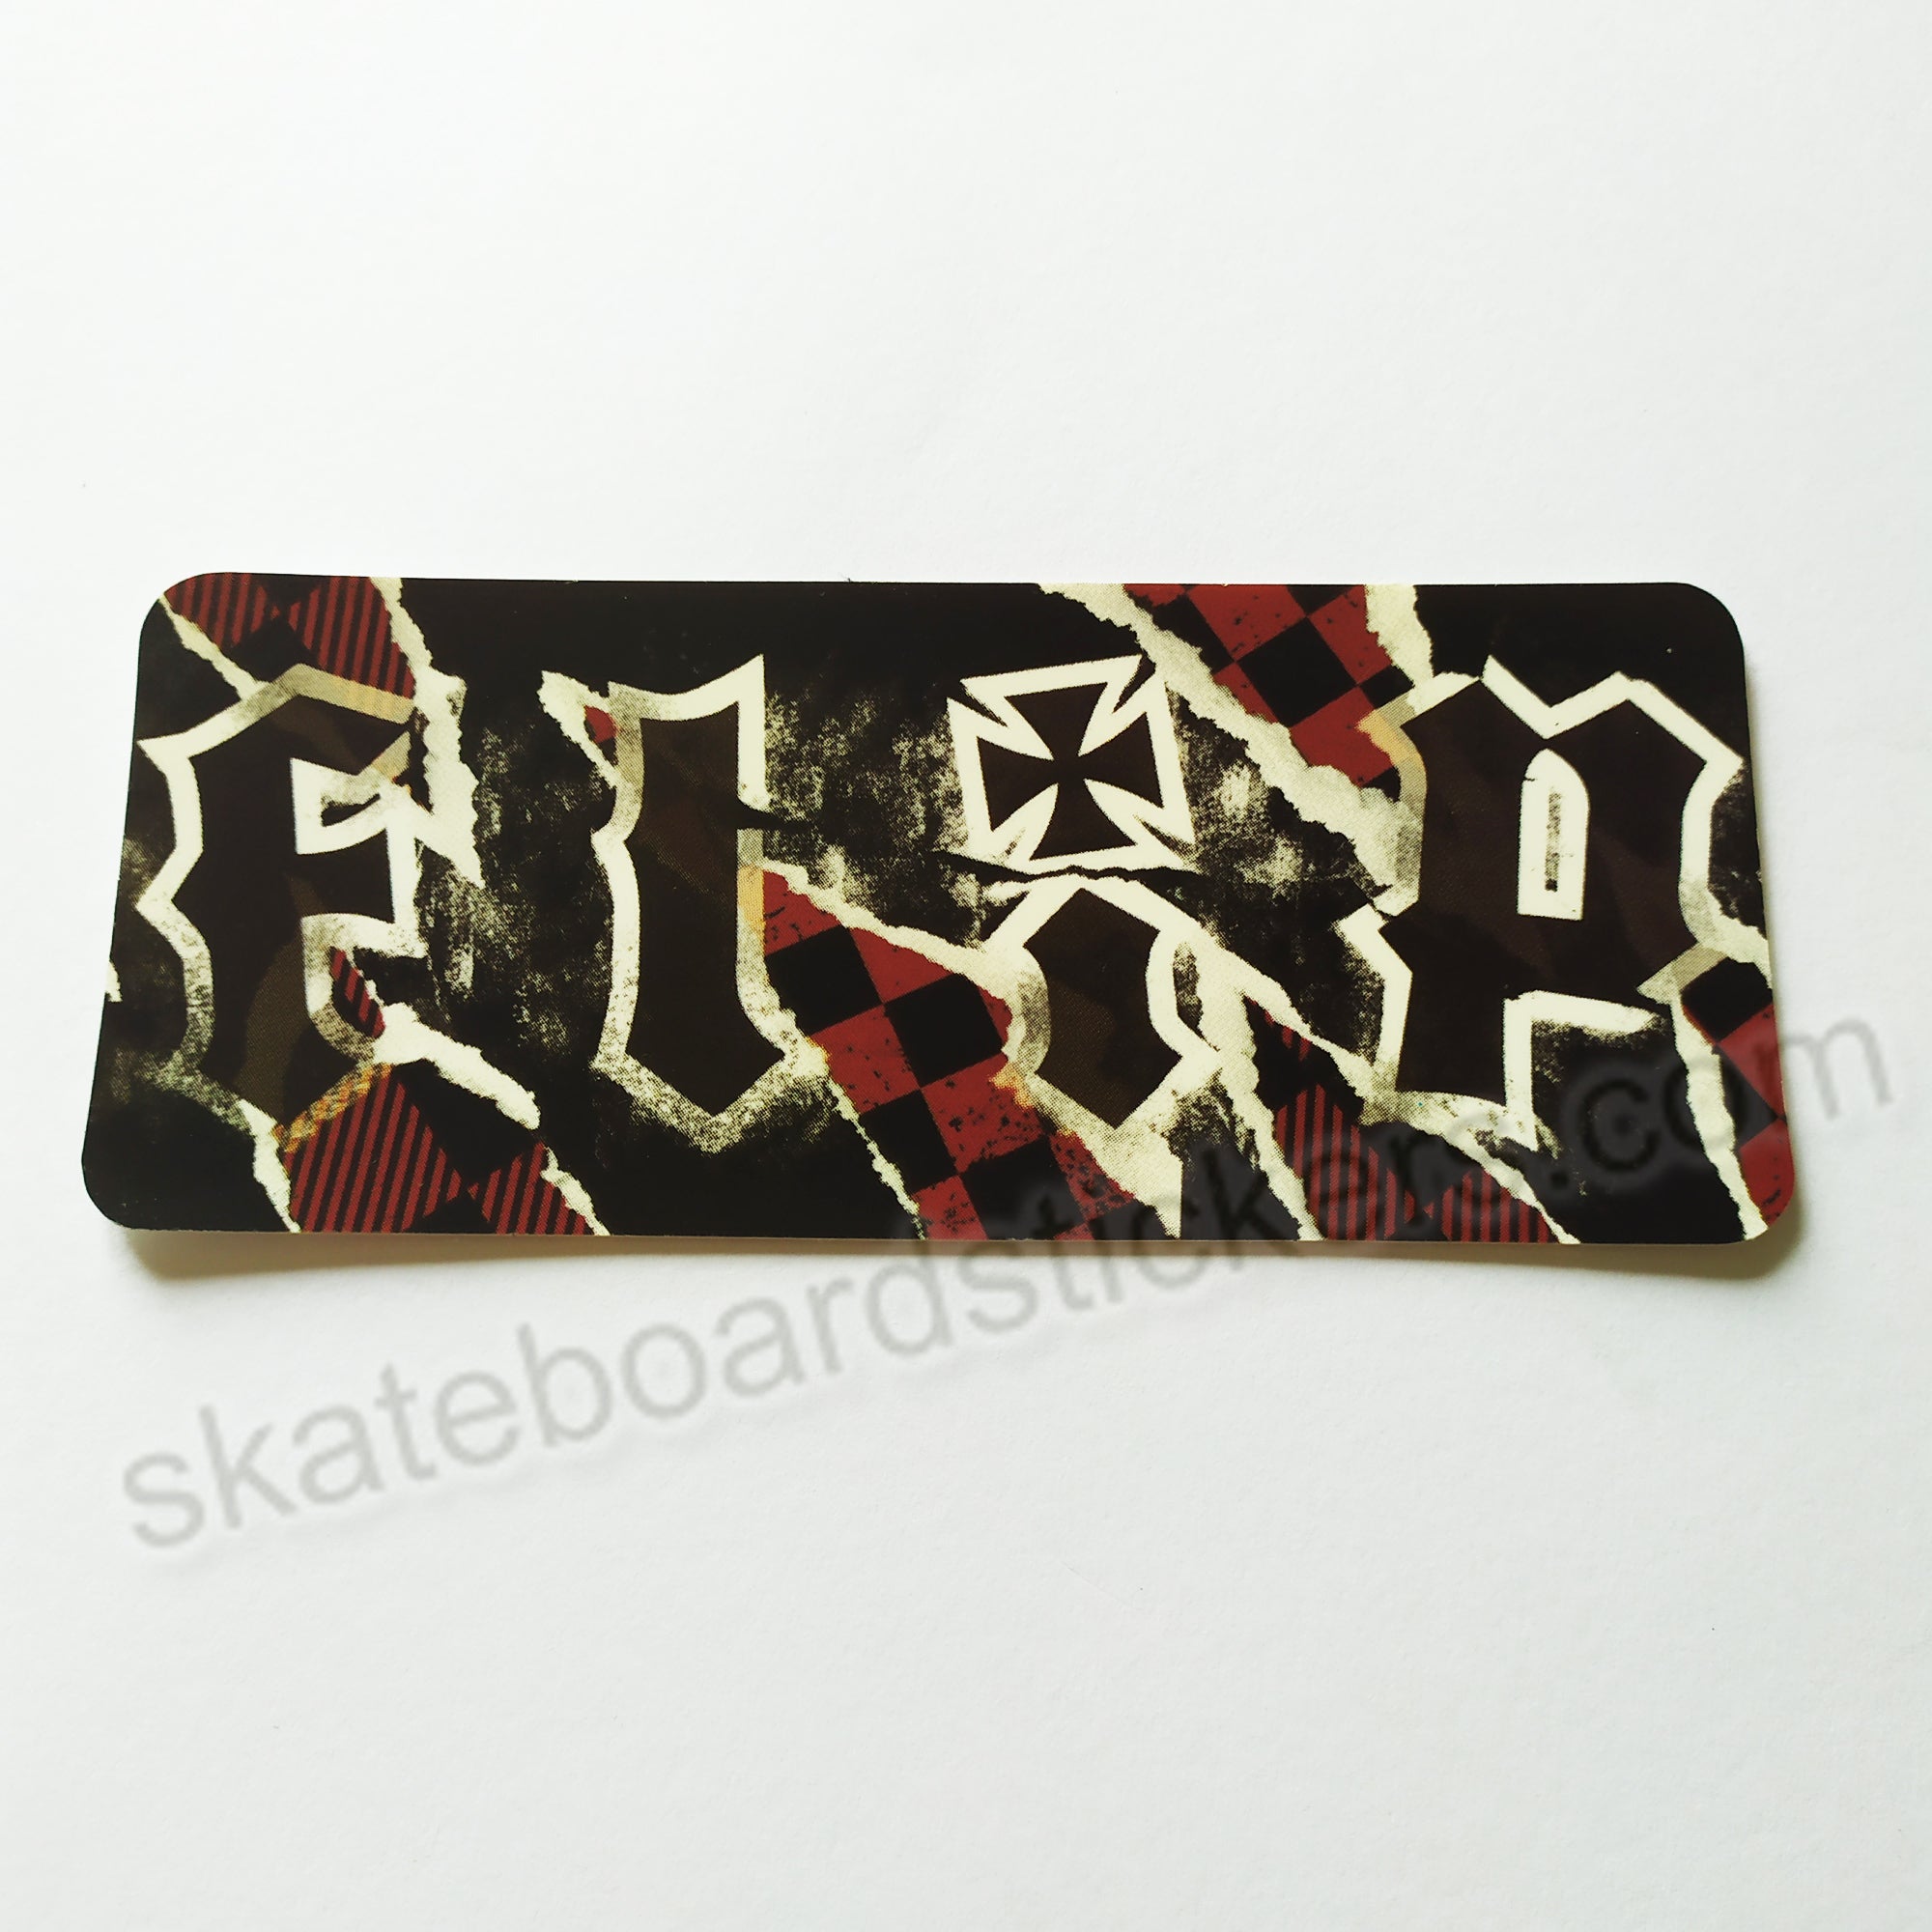 Flip Skateboard Sticker - United - SkateboardStickers.com